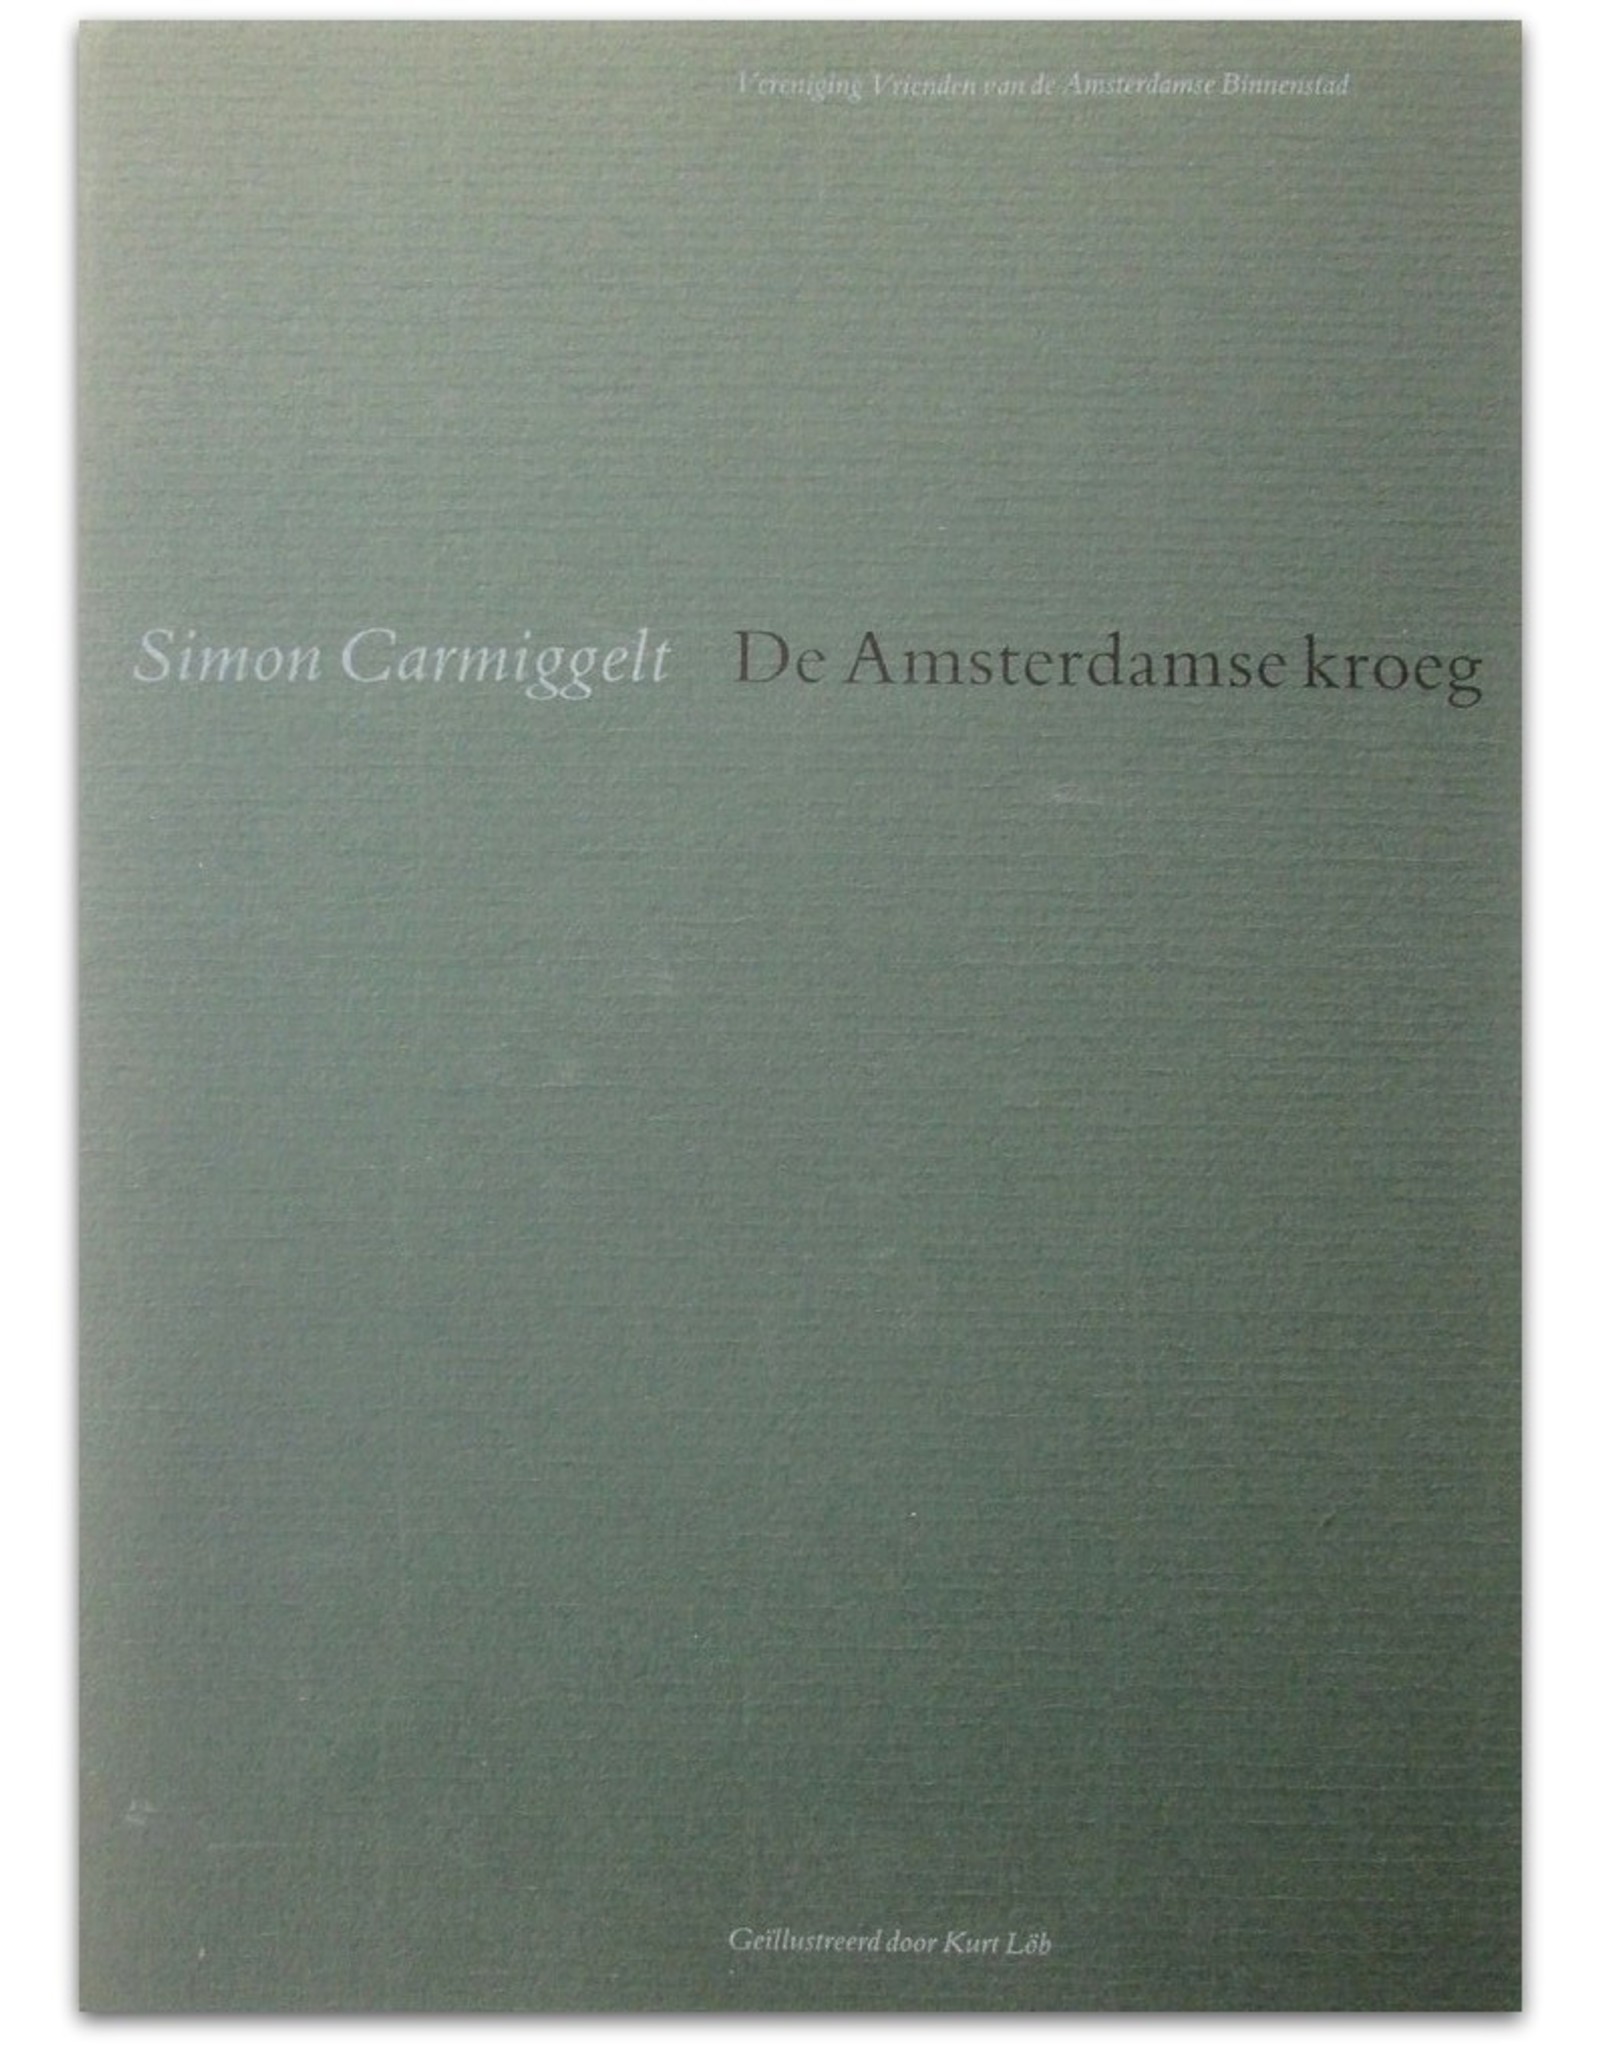 Simon Carmiggelt - De Amsterdamse kroeg. Geïllustreerd door Kurt Löb